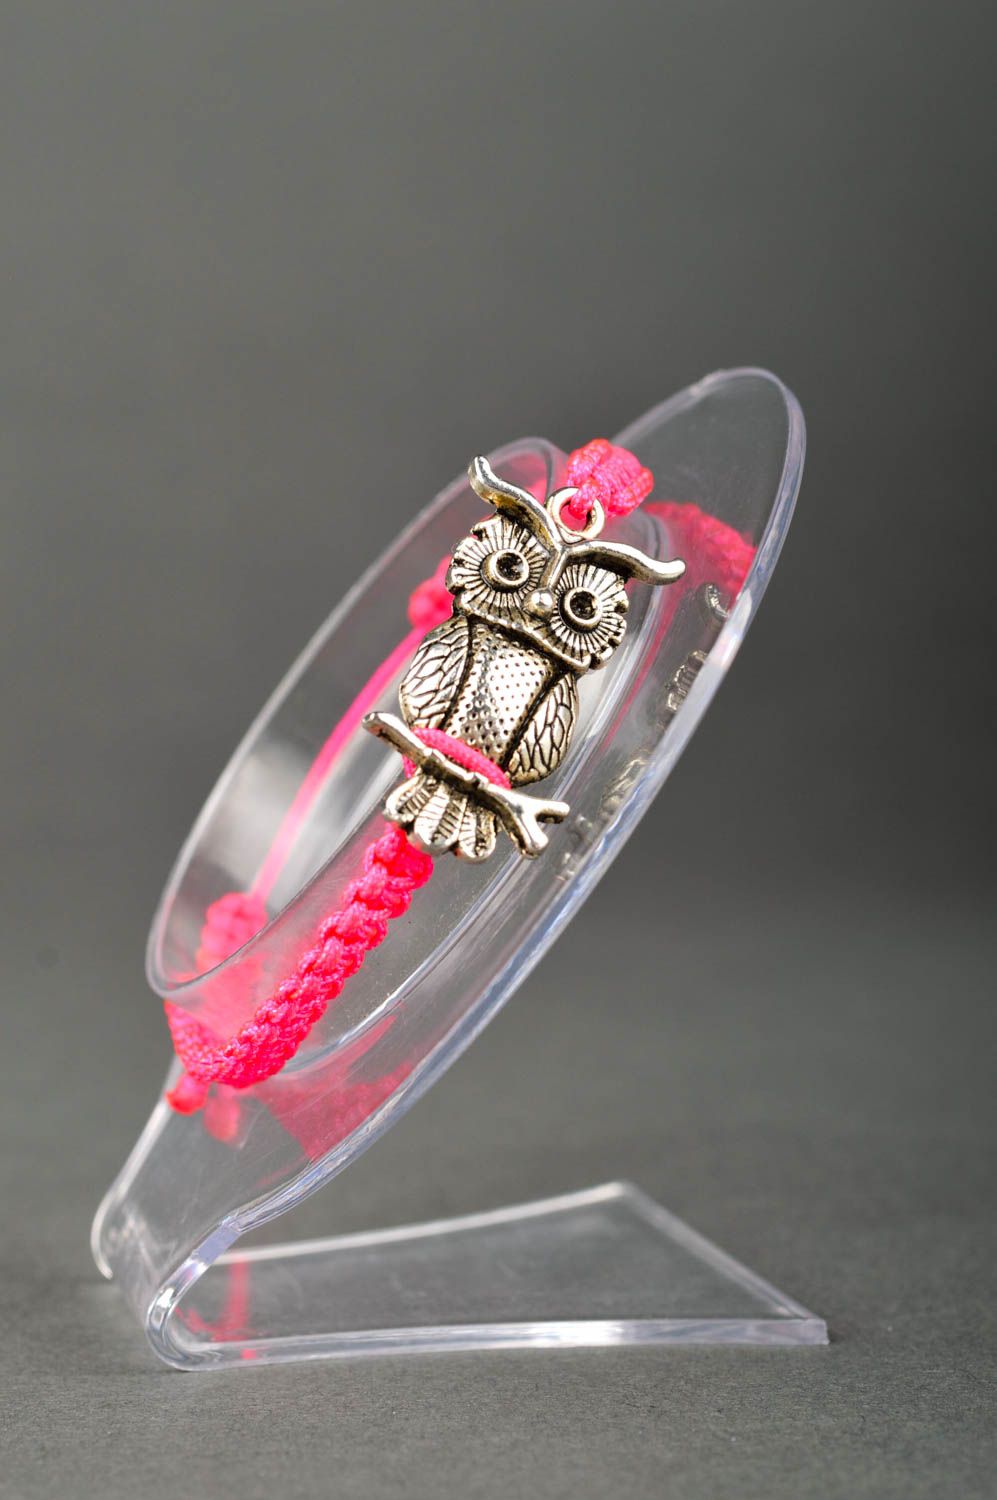 Grelles Armband Frauen handmade Mode Schmuck tolles rosa Armband mit Eule foto 2